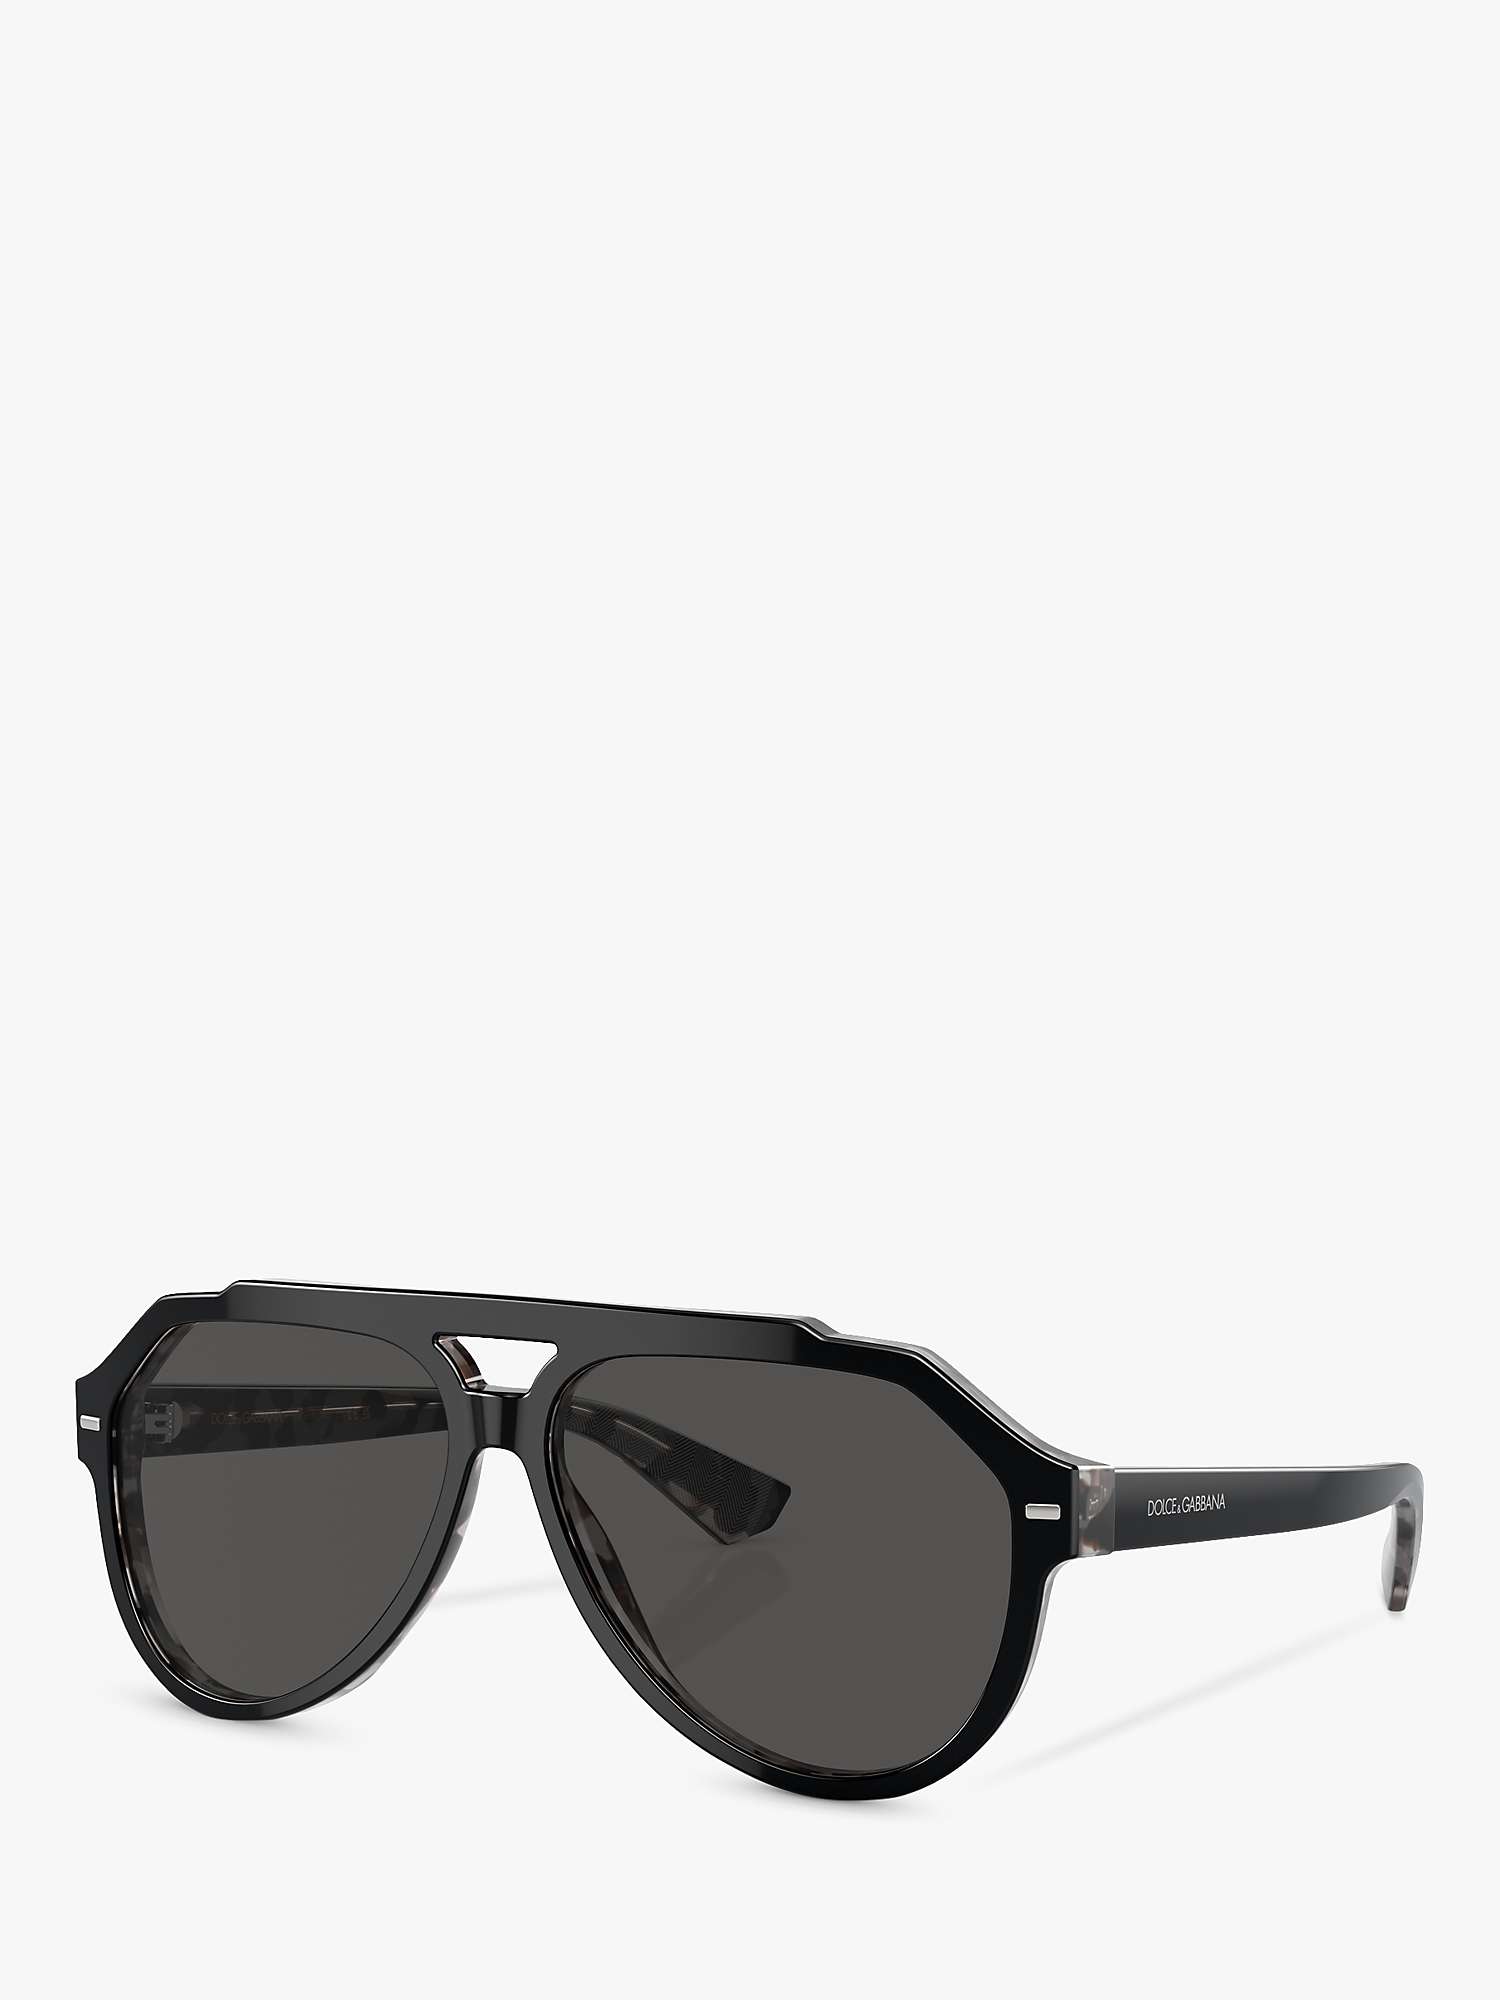 Buy Dolce & Gabbana DG4452 Men's Aviator Sunglasses, Black/Grey Online at johnlewis.com